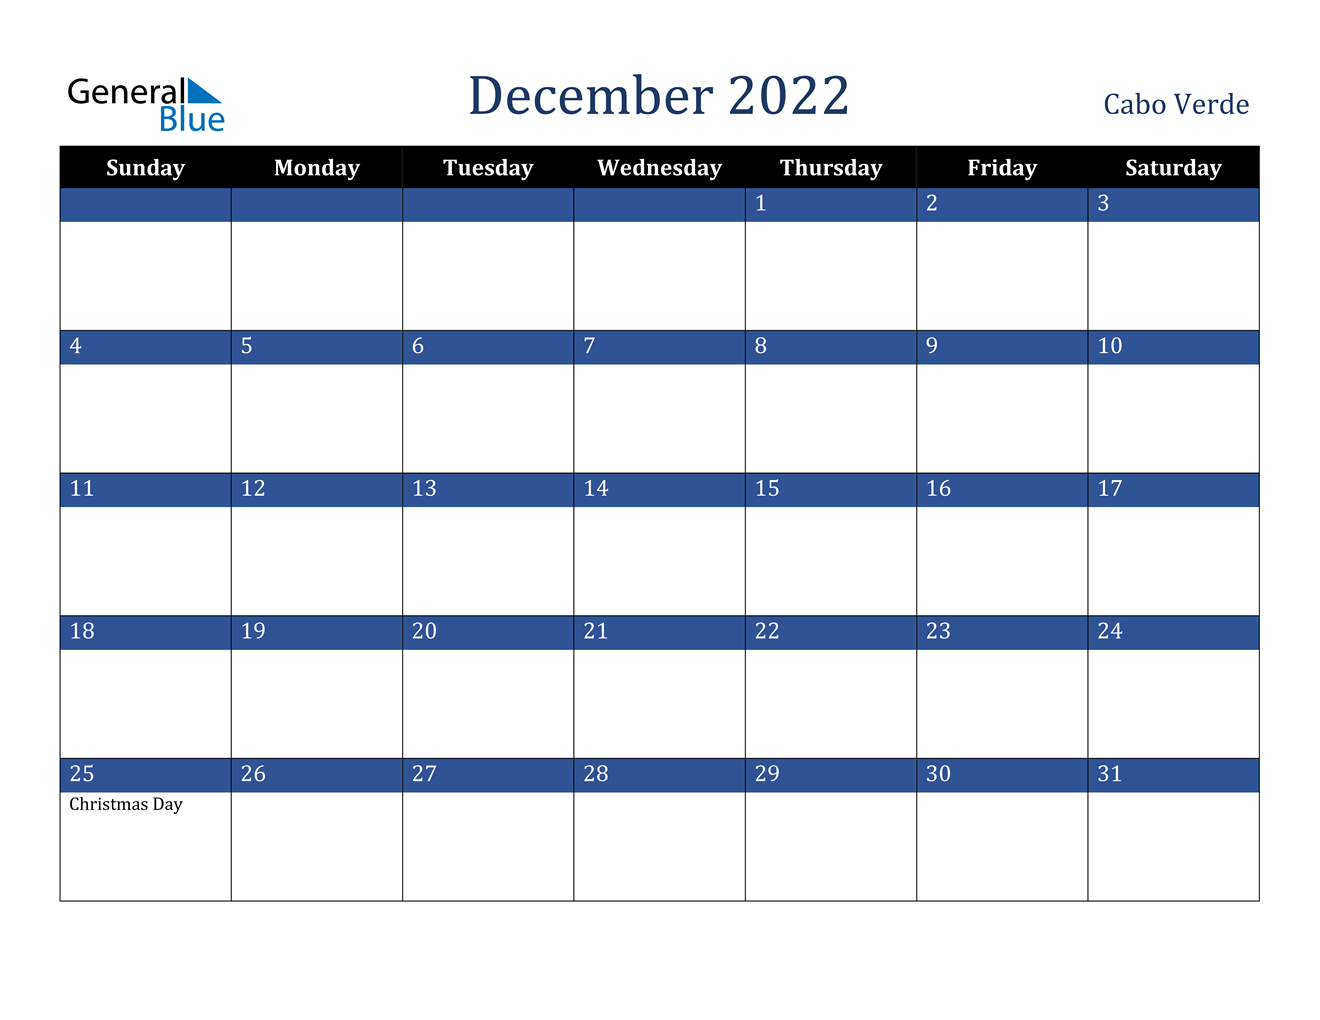 December 2022 Calendar - Cabo Verde